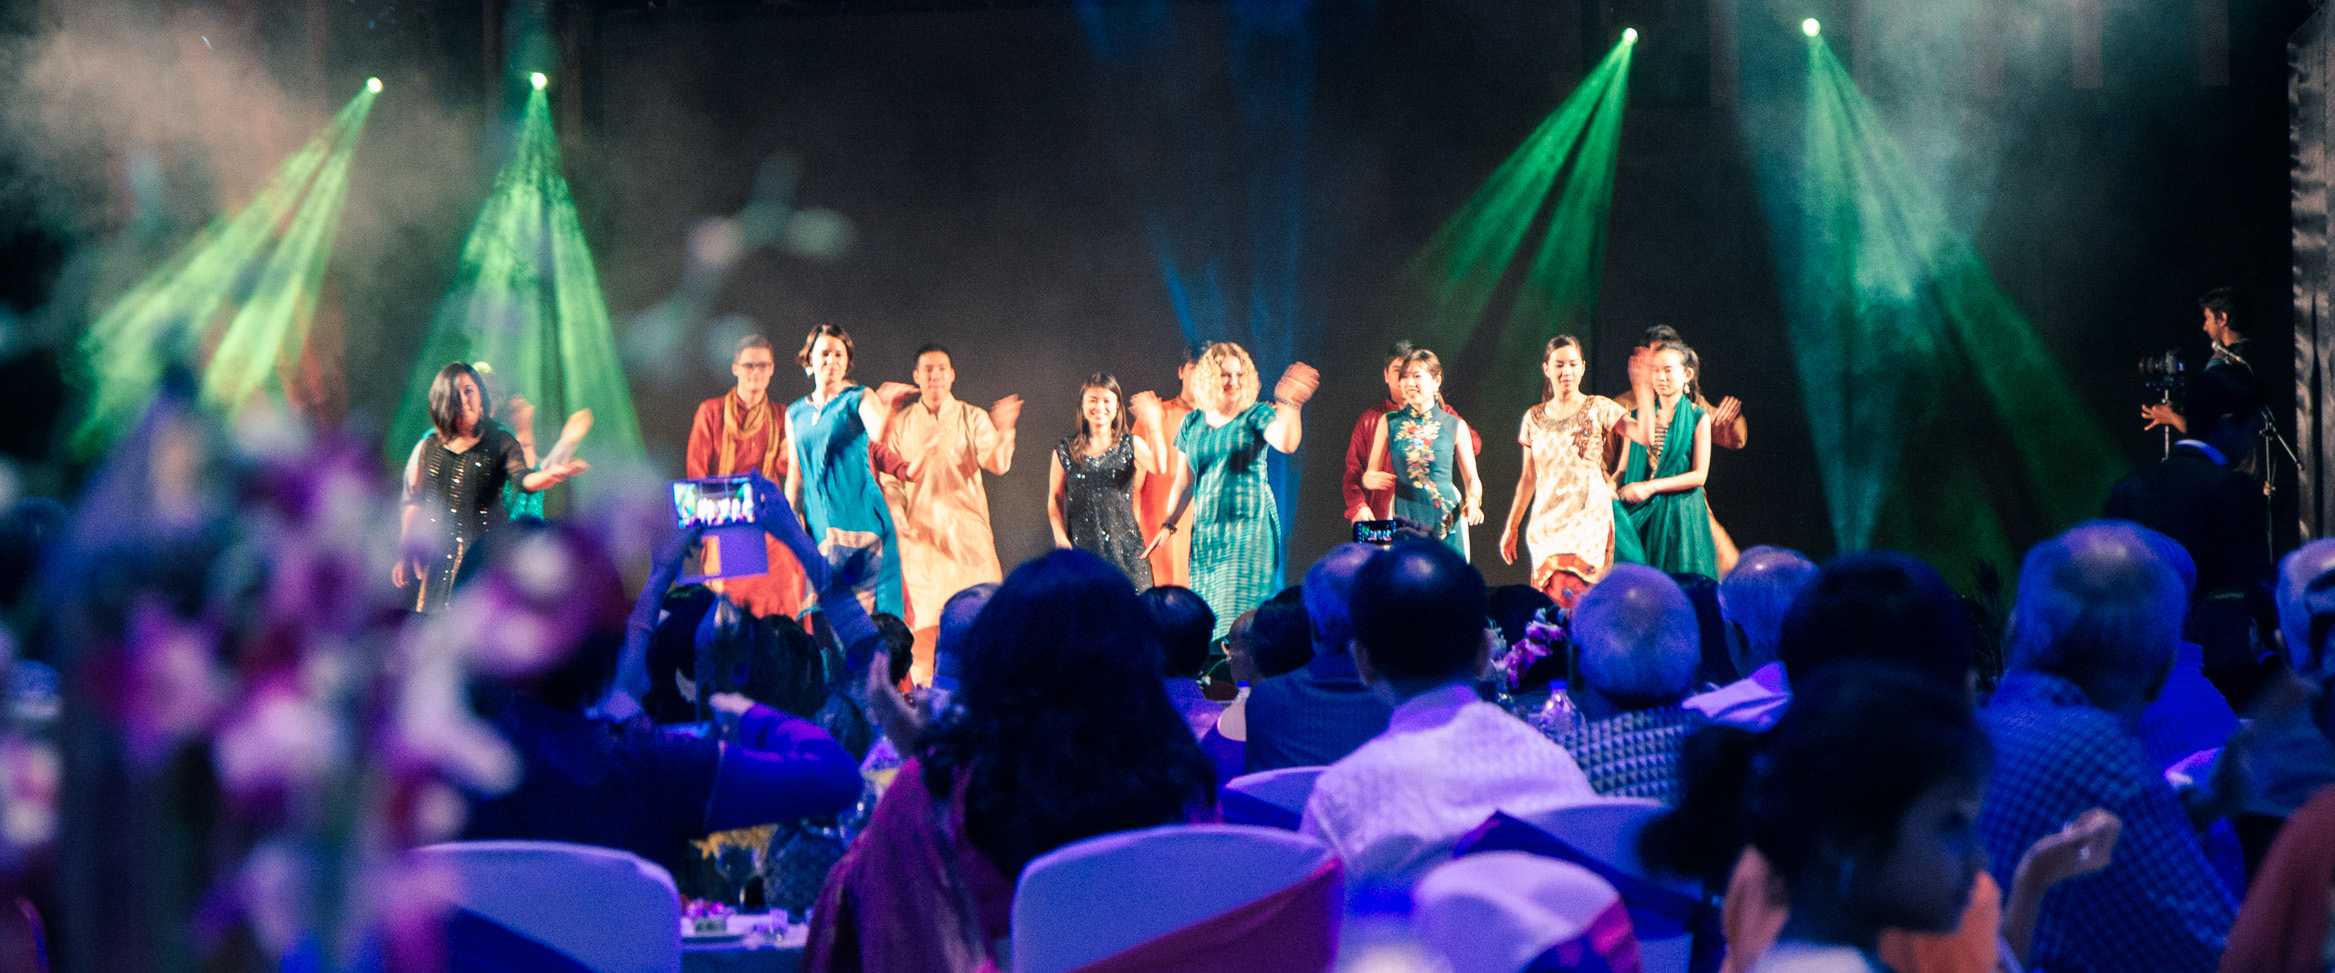 Dance Performances at the Sangeet (Pre-Wedding Party)